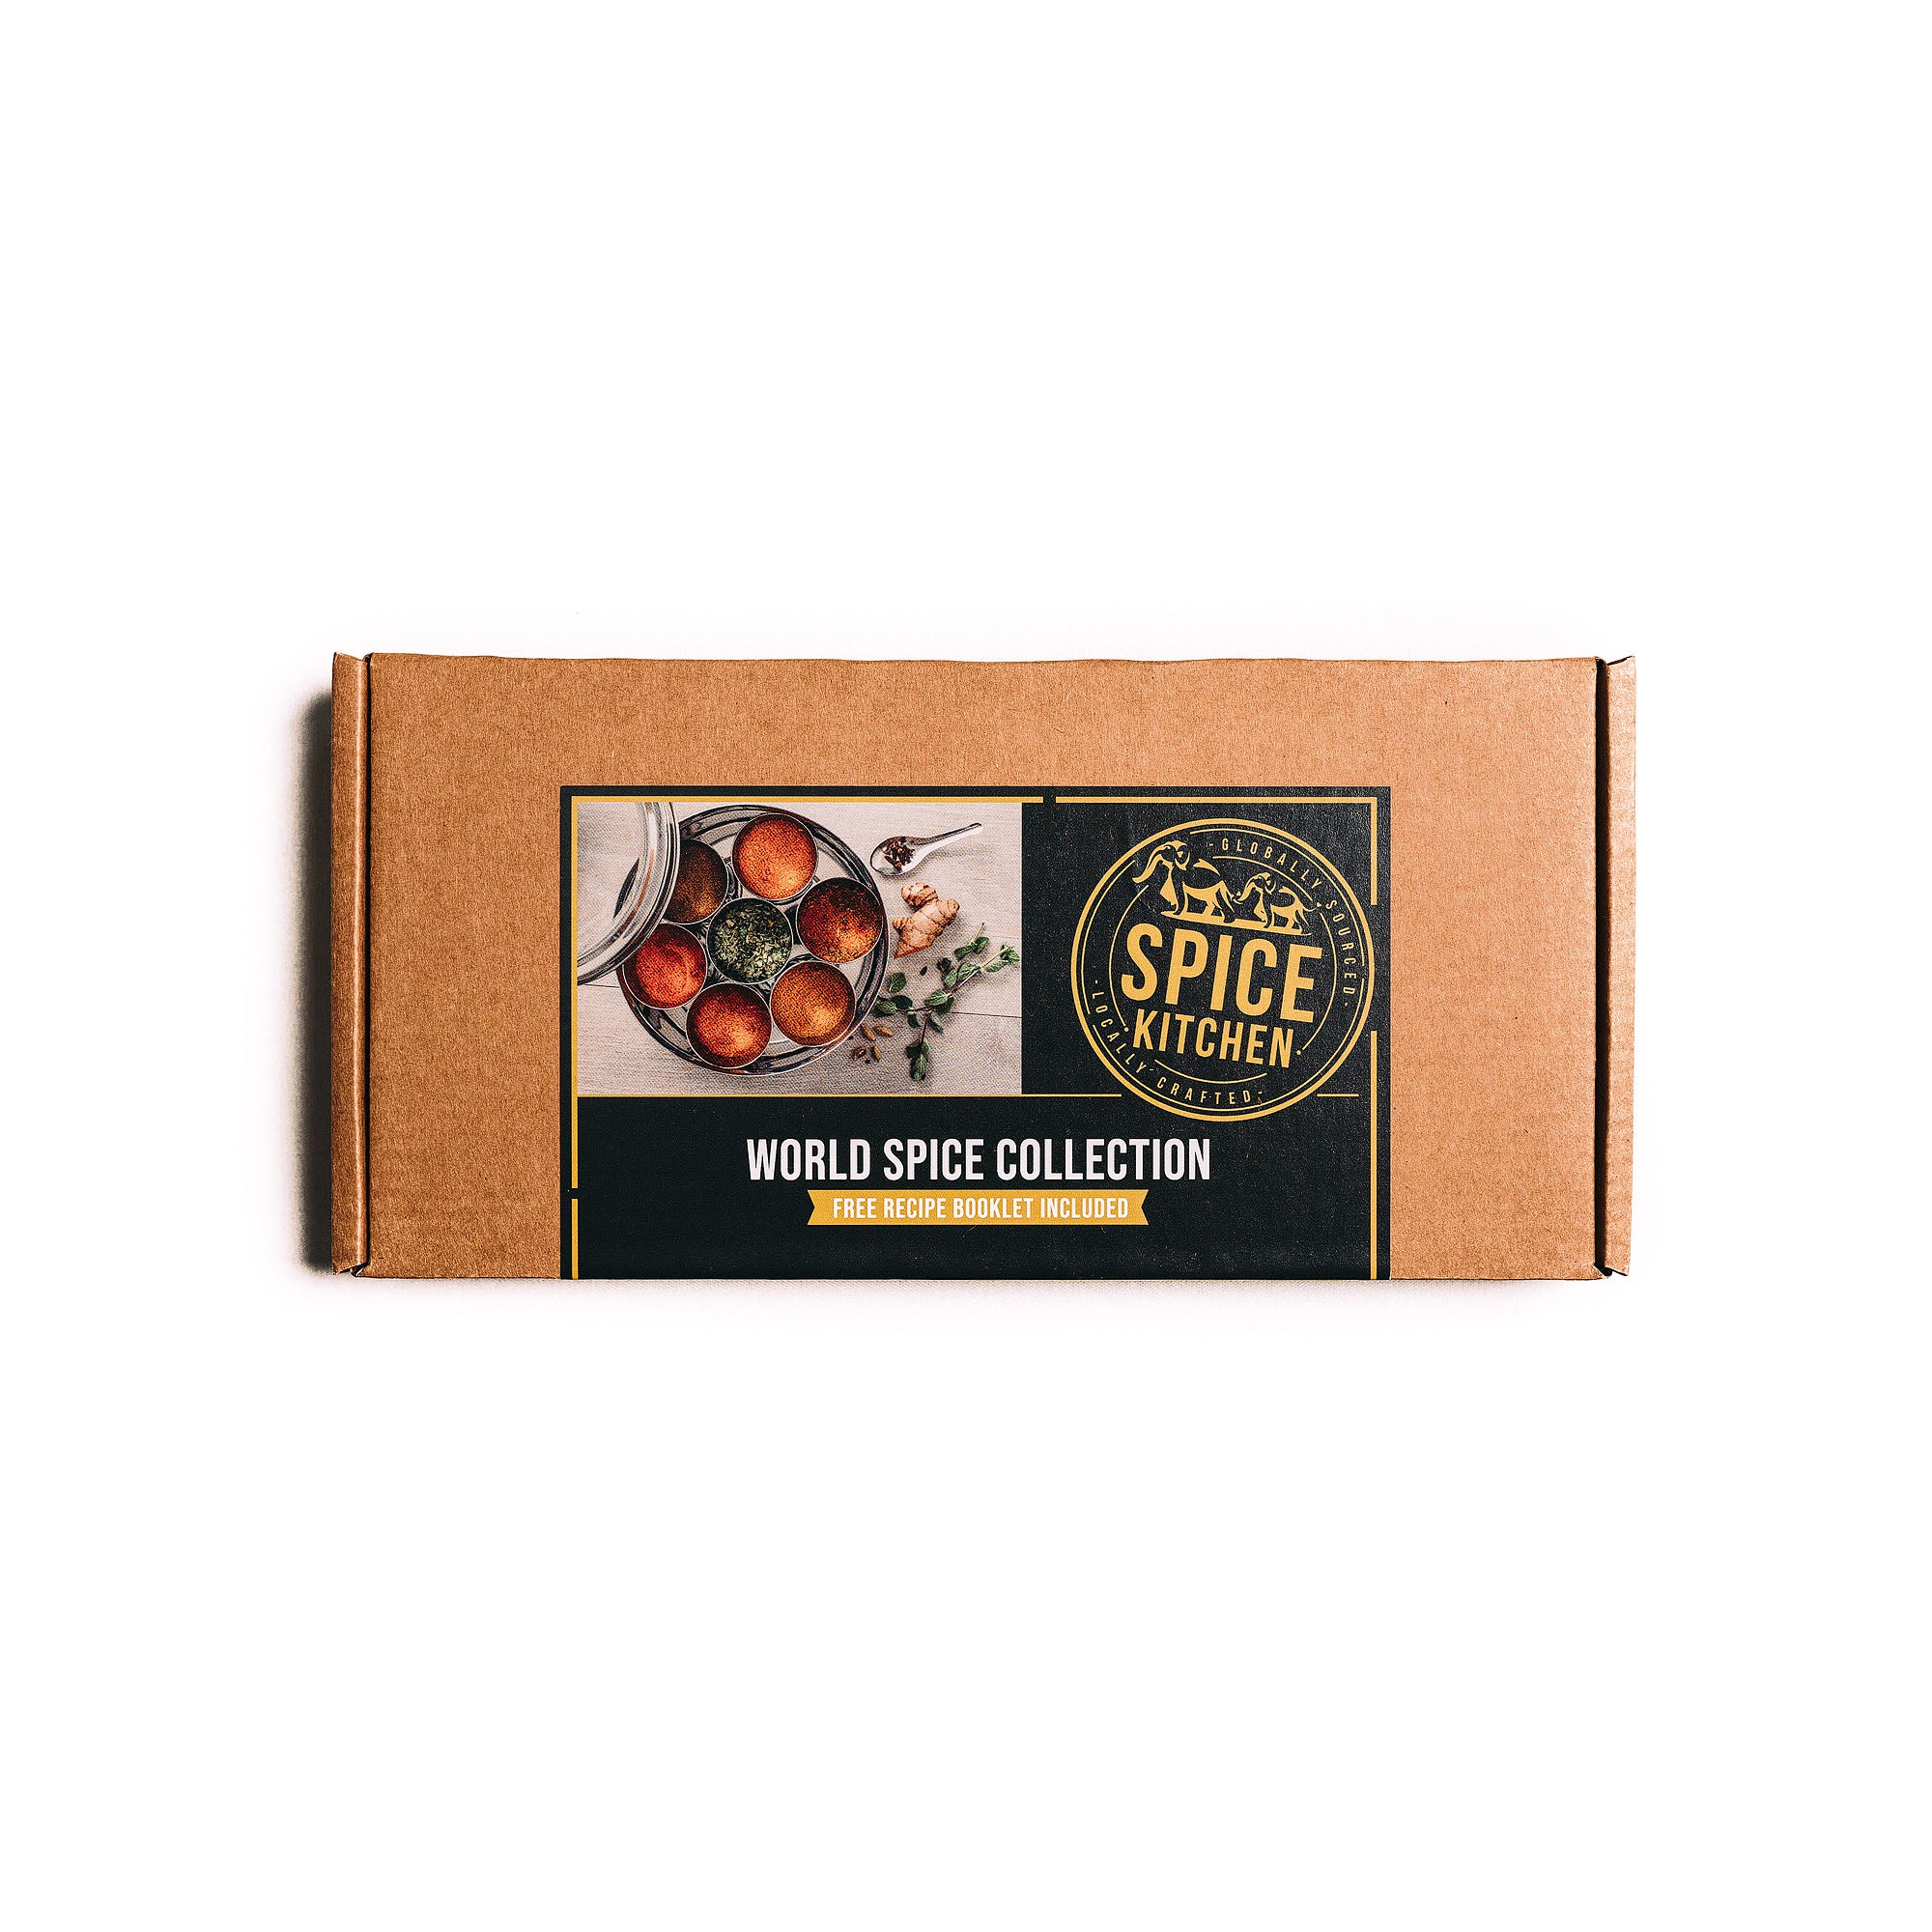 World Spice Collection – Spice Kitchen